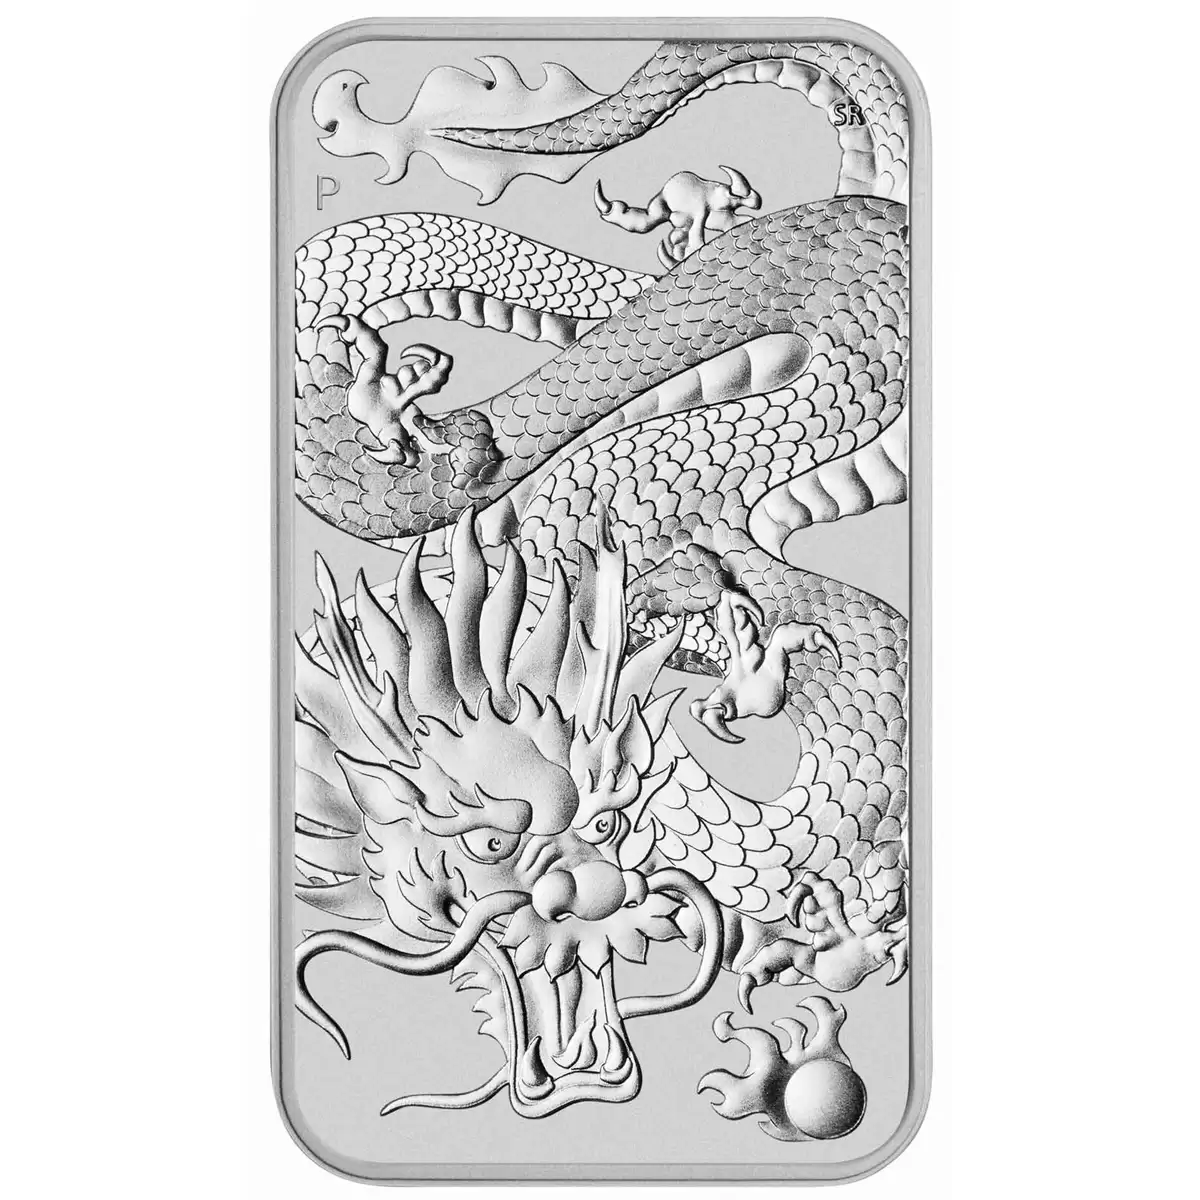  1oz Perth Mint Silver 2022 Dragon Rectangular Bullion Coin